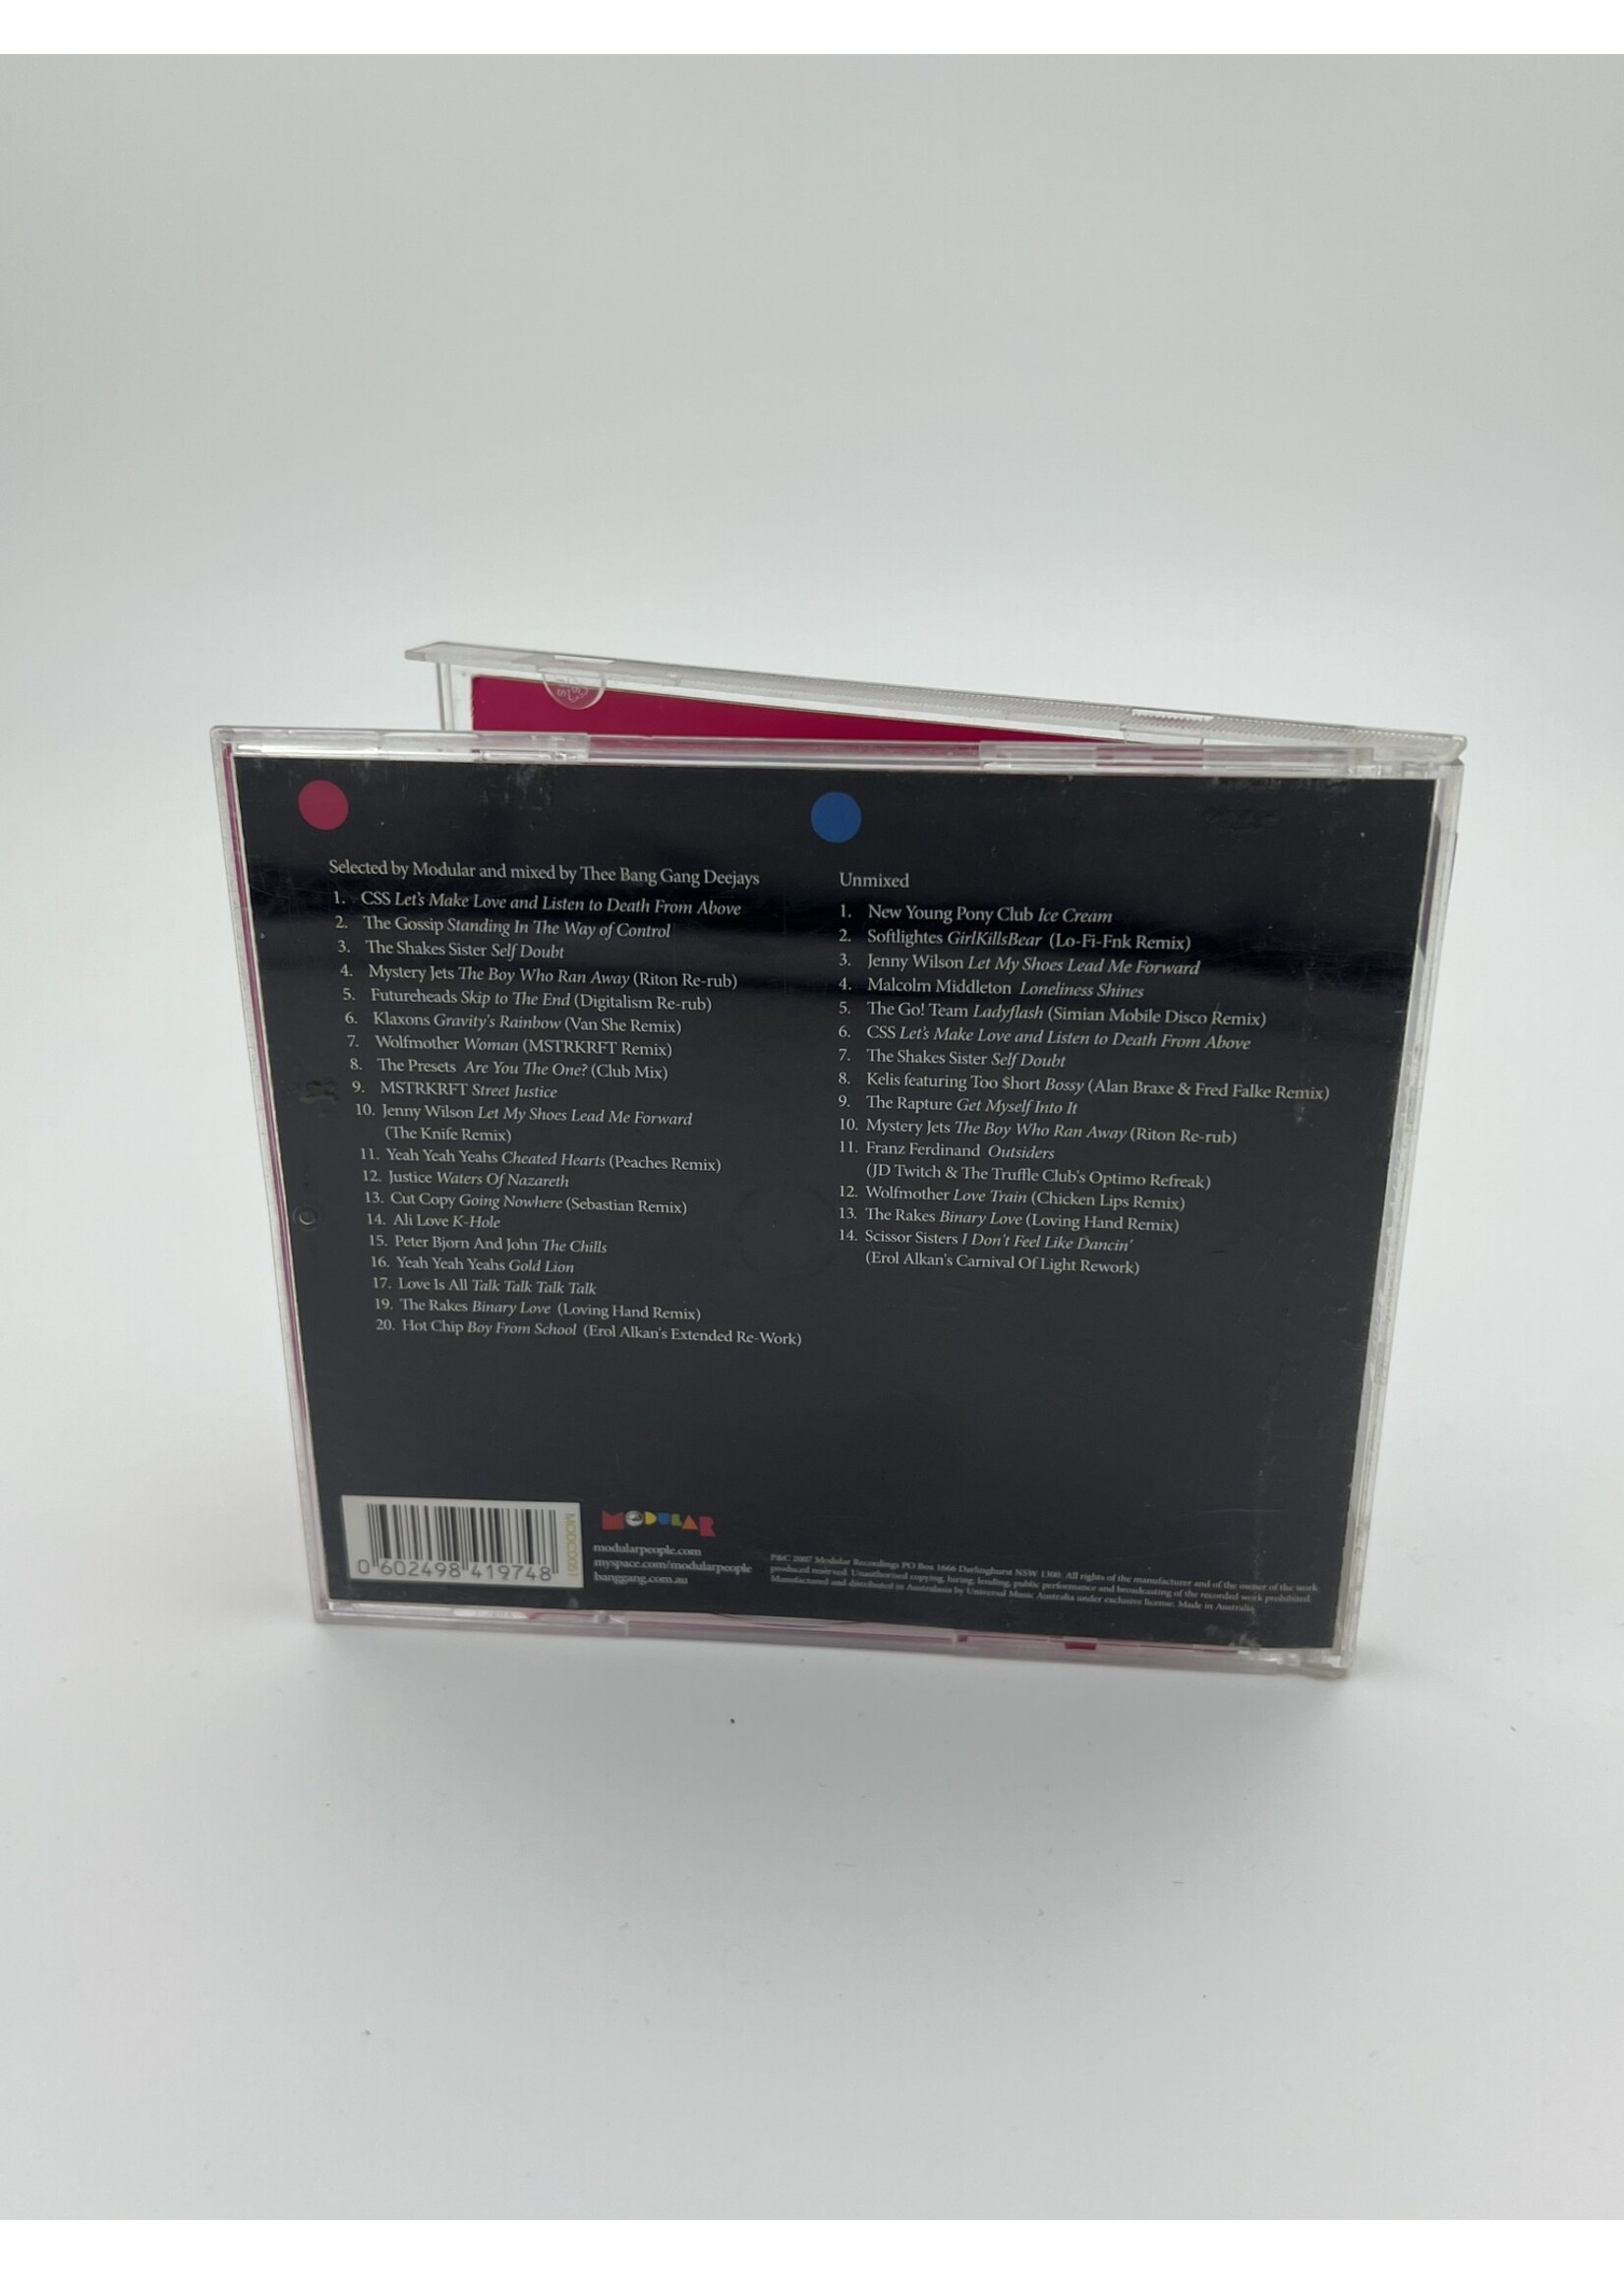 CD Modular Presents Leave Them All Behind 2 Various Artist 2 CD